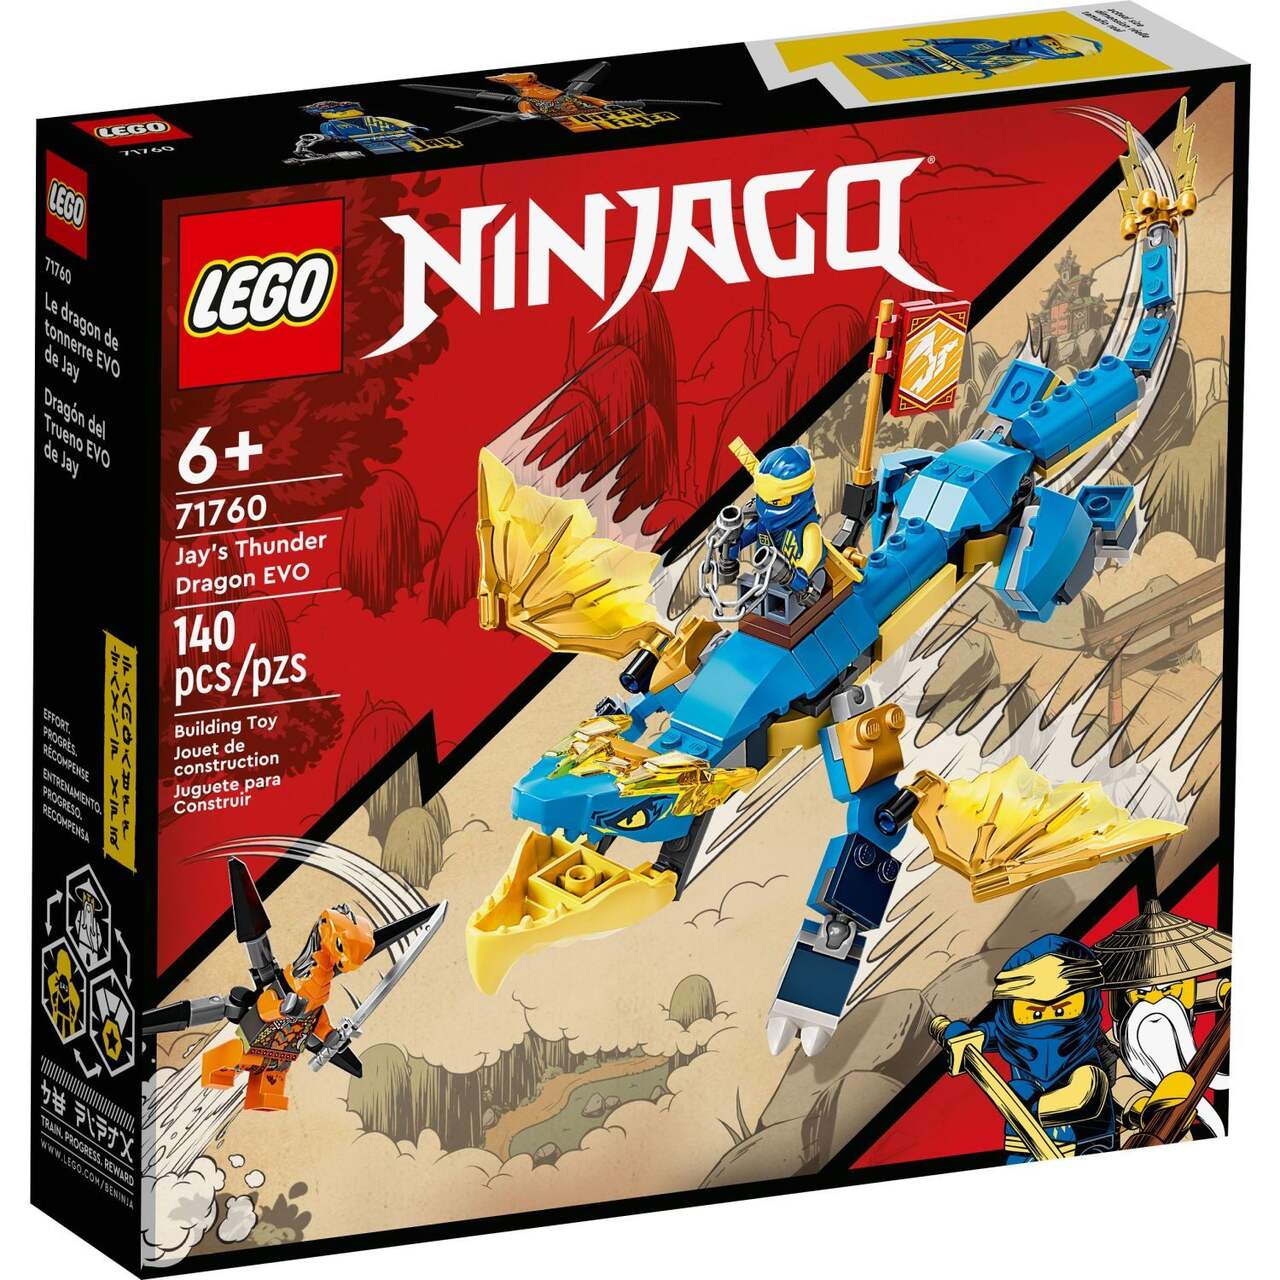 LEGO NINJAGO Le dragon de tonnerre EVO de Jay, 71760, 140 pcs, 7